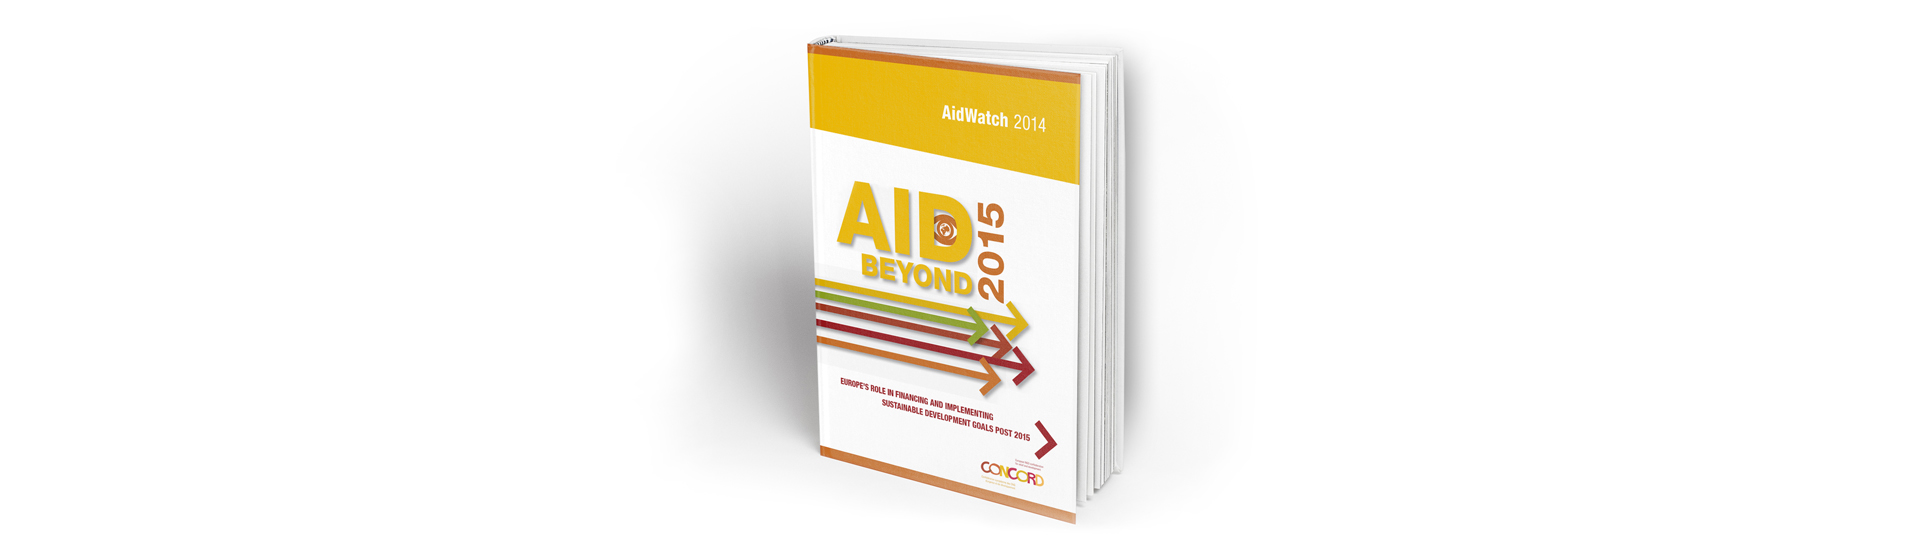 Firemné materiály: Výročná správa Aidwatch 2014